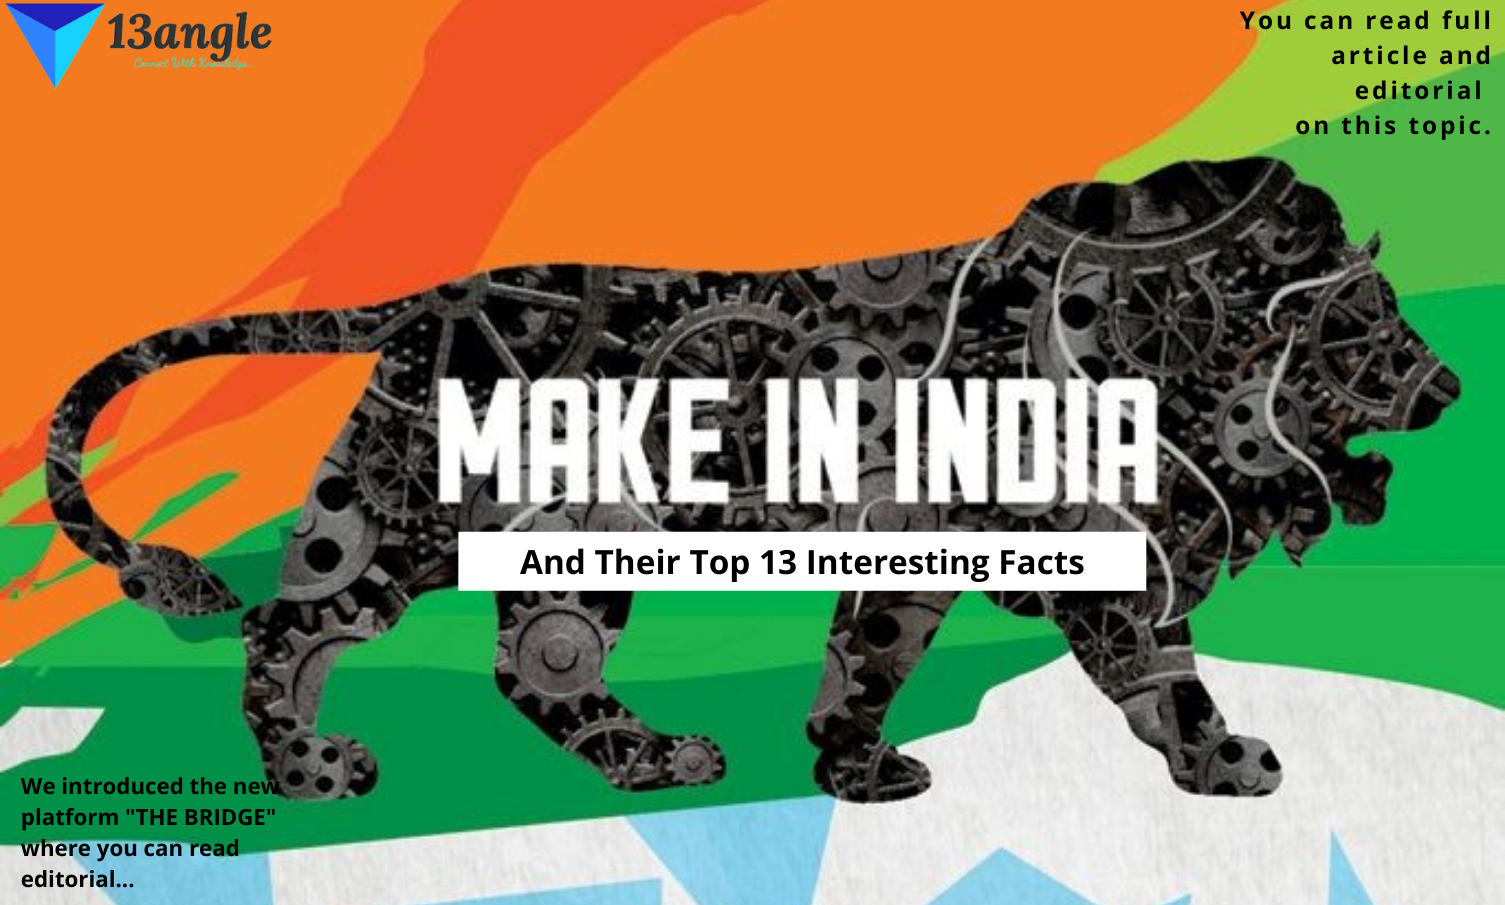 Make In India- 13angle.com